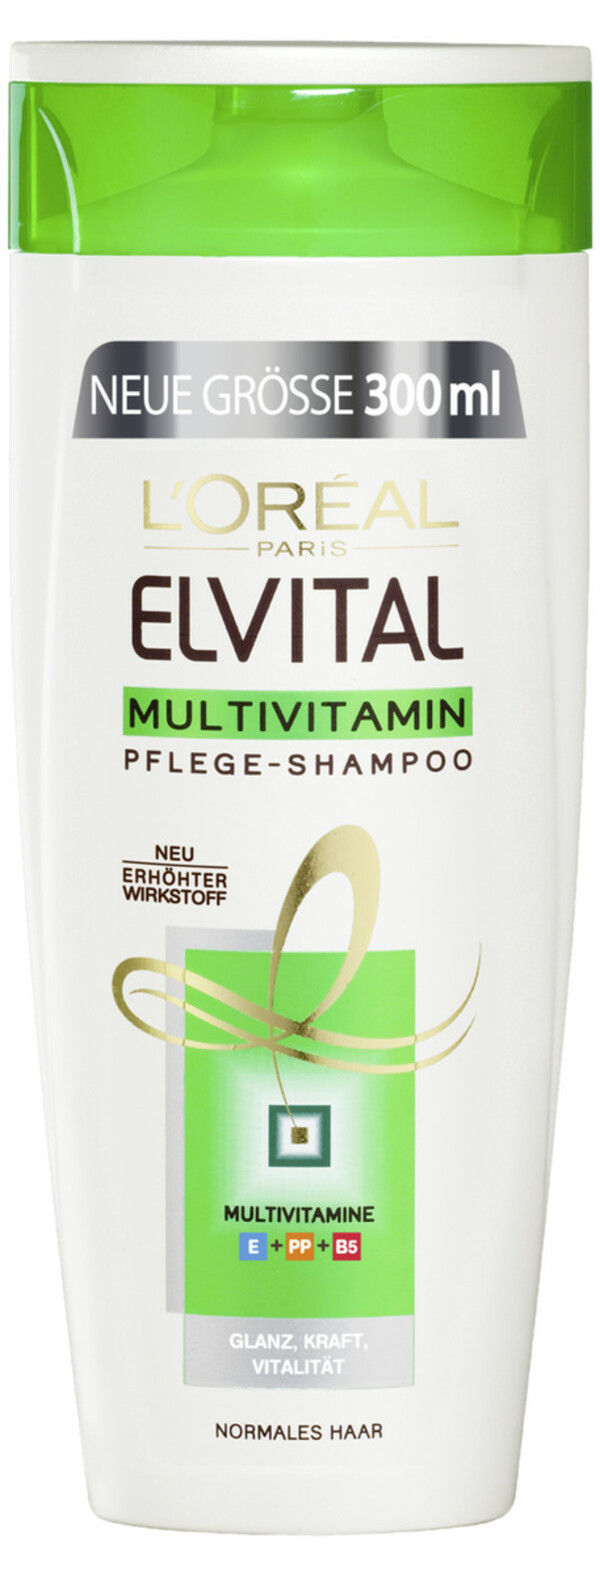 Bild 1 von L'Oreal Elvital Multivitamin Pflege-Shampoo 0,3 ltr